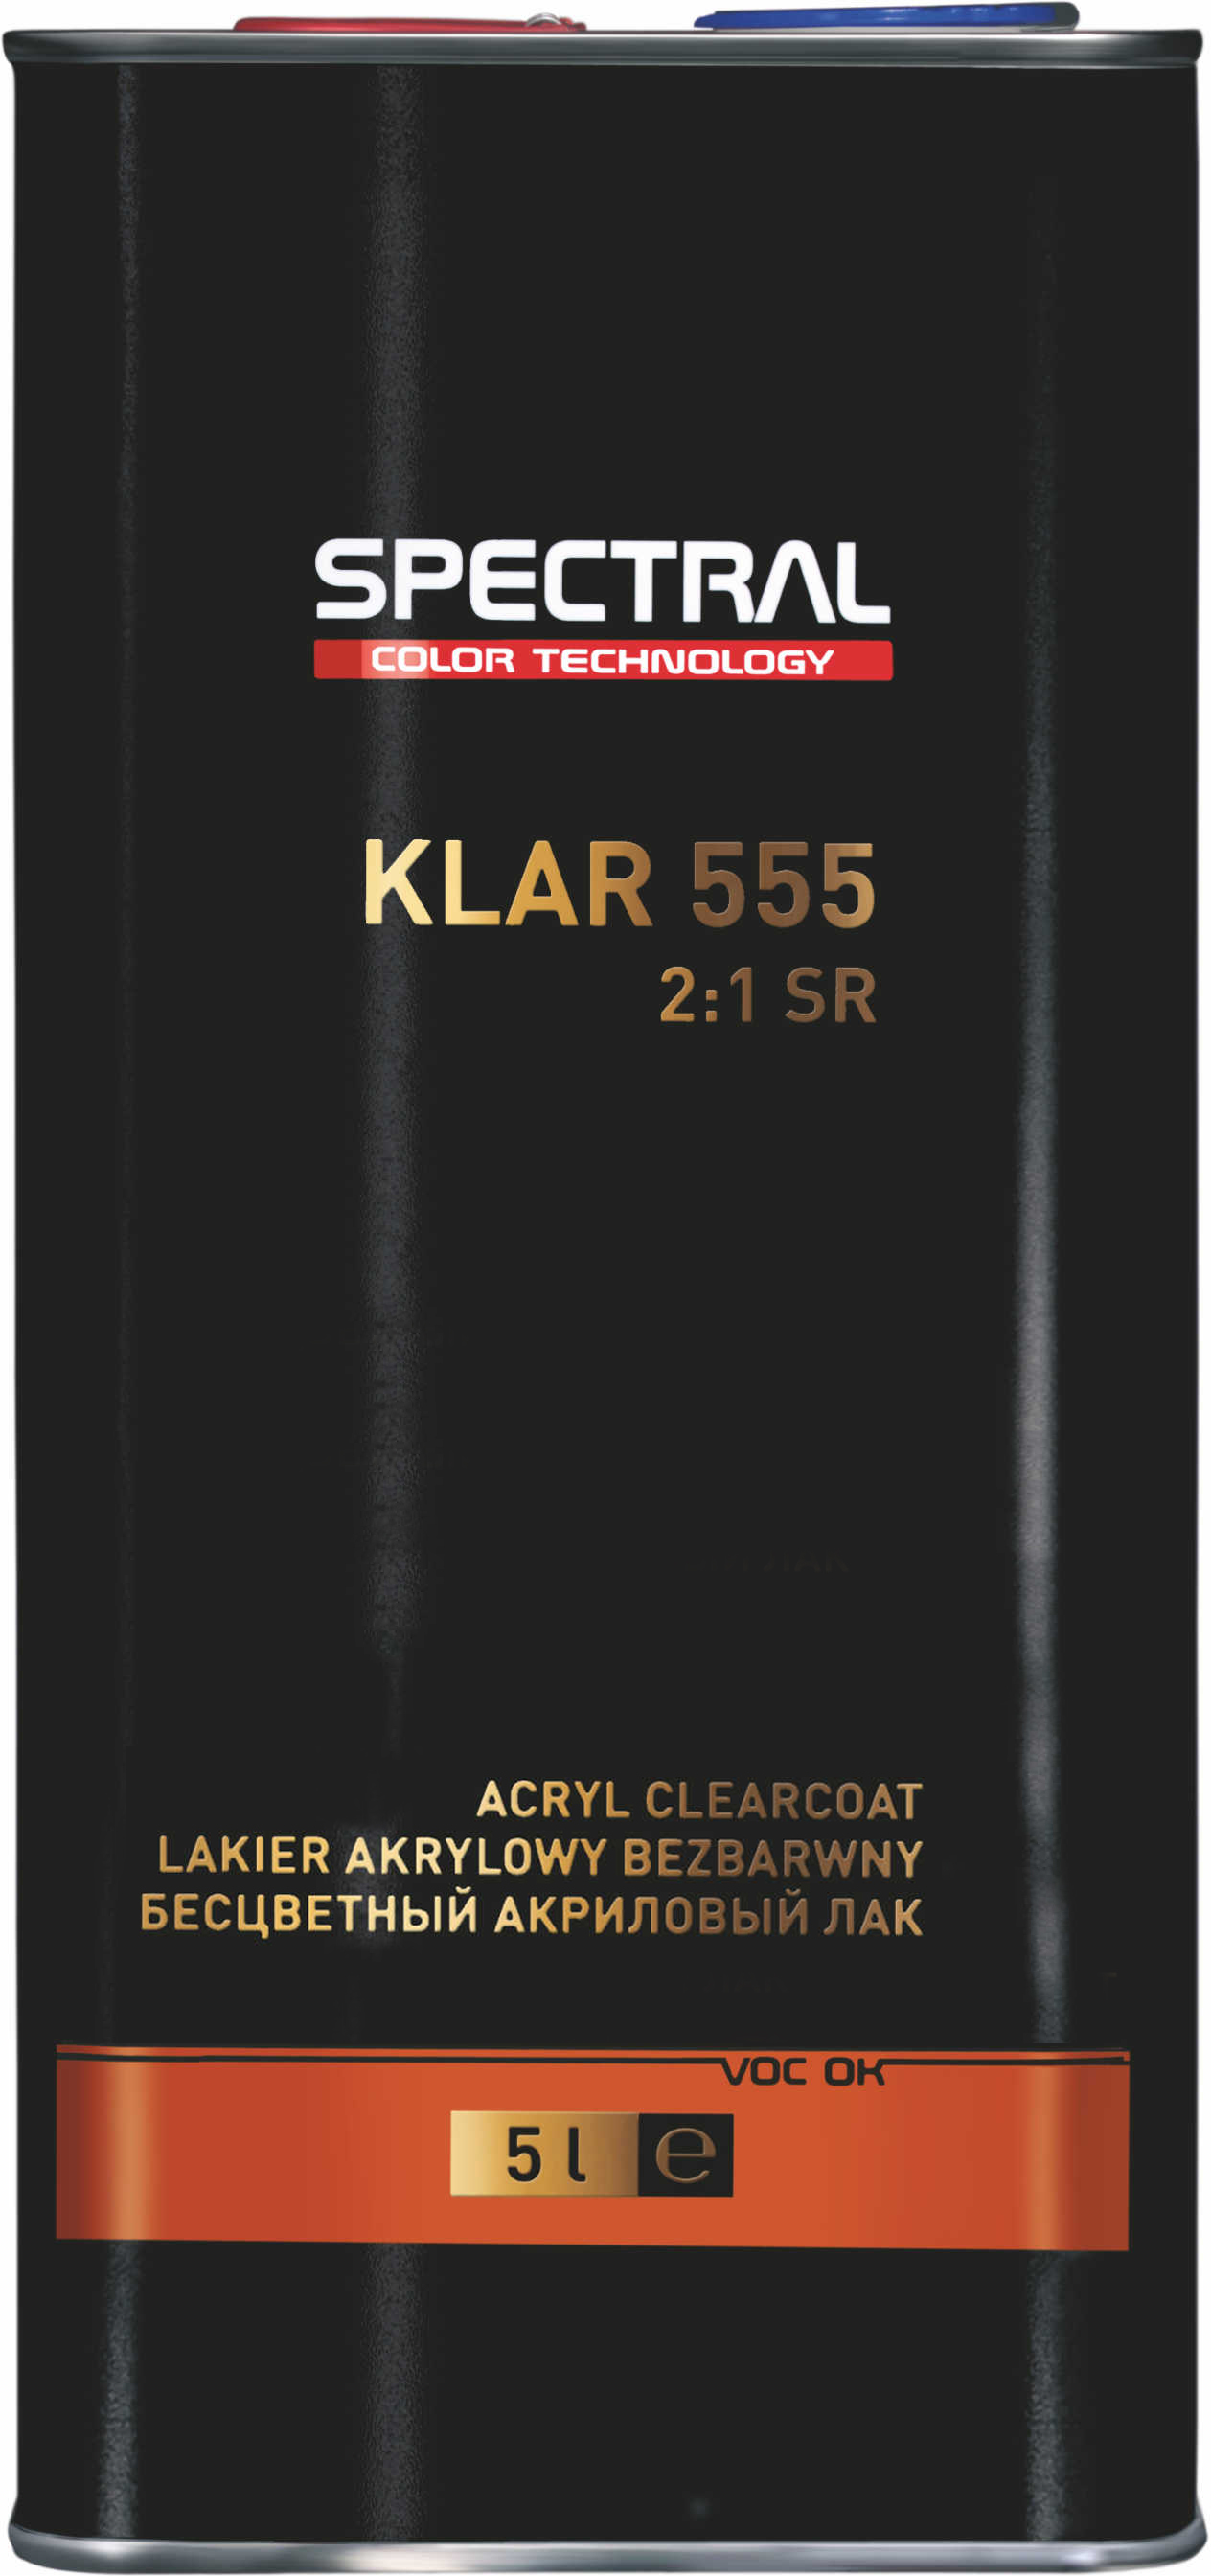 KLAR 555 - 2K-Acrylklarlack mit erhöhter Kratzfestigkeit (Scratch Resistant – SR)